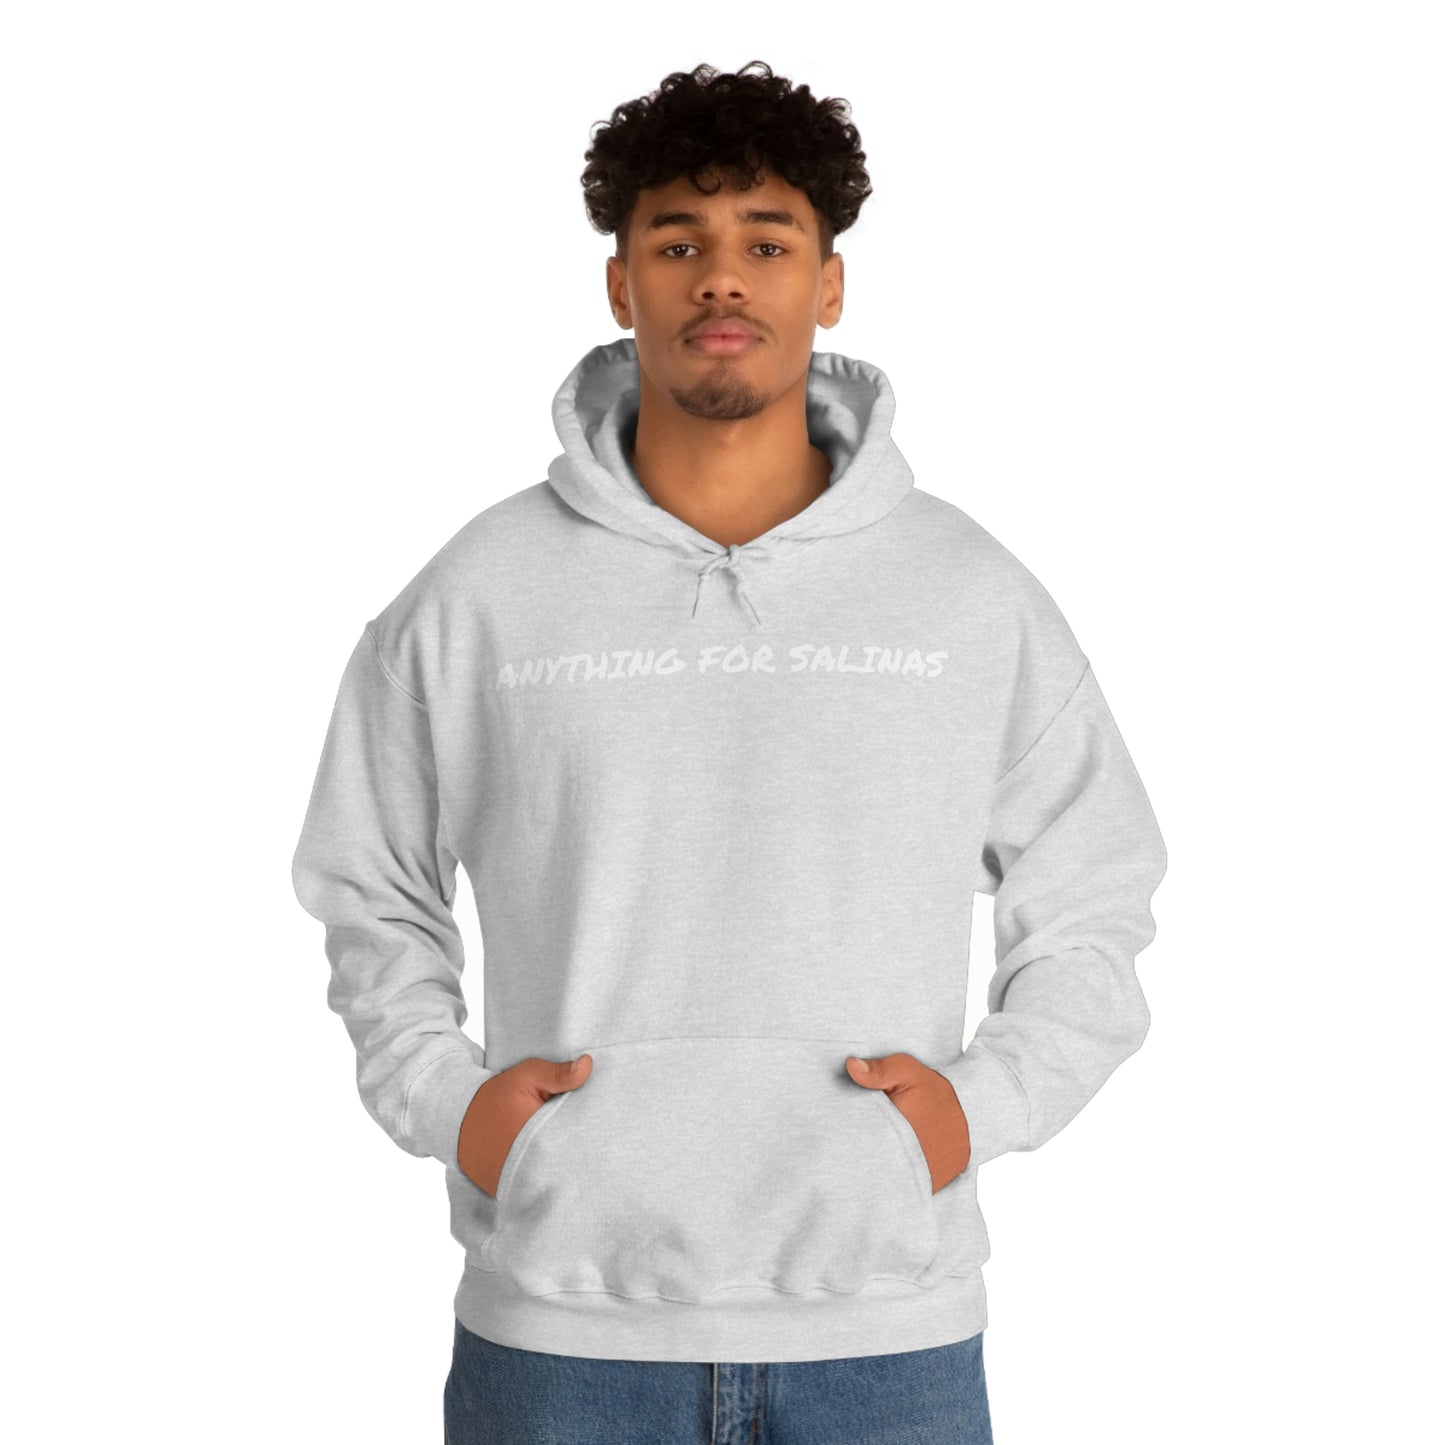 ANYTHING FOR SALINAS ALTERNATE Unisex Heavy Blend™ Hooded Sweatshirt